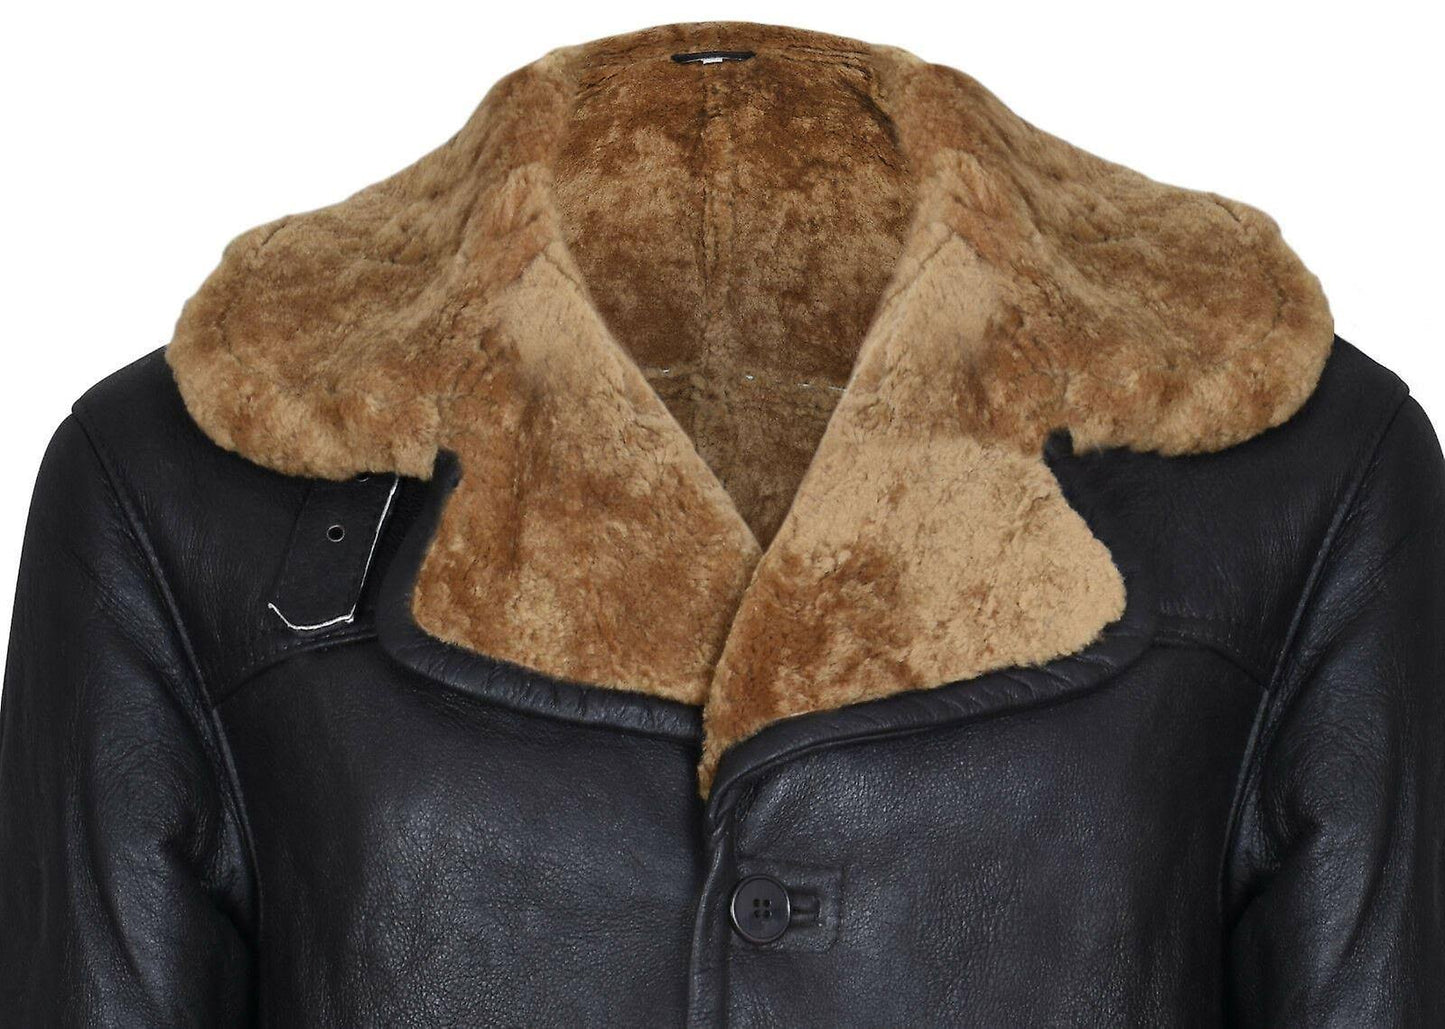 Ginger Sheepskin Leather Cromby Pilot Coat